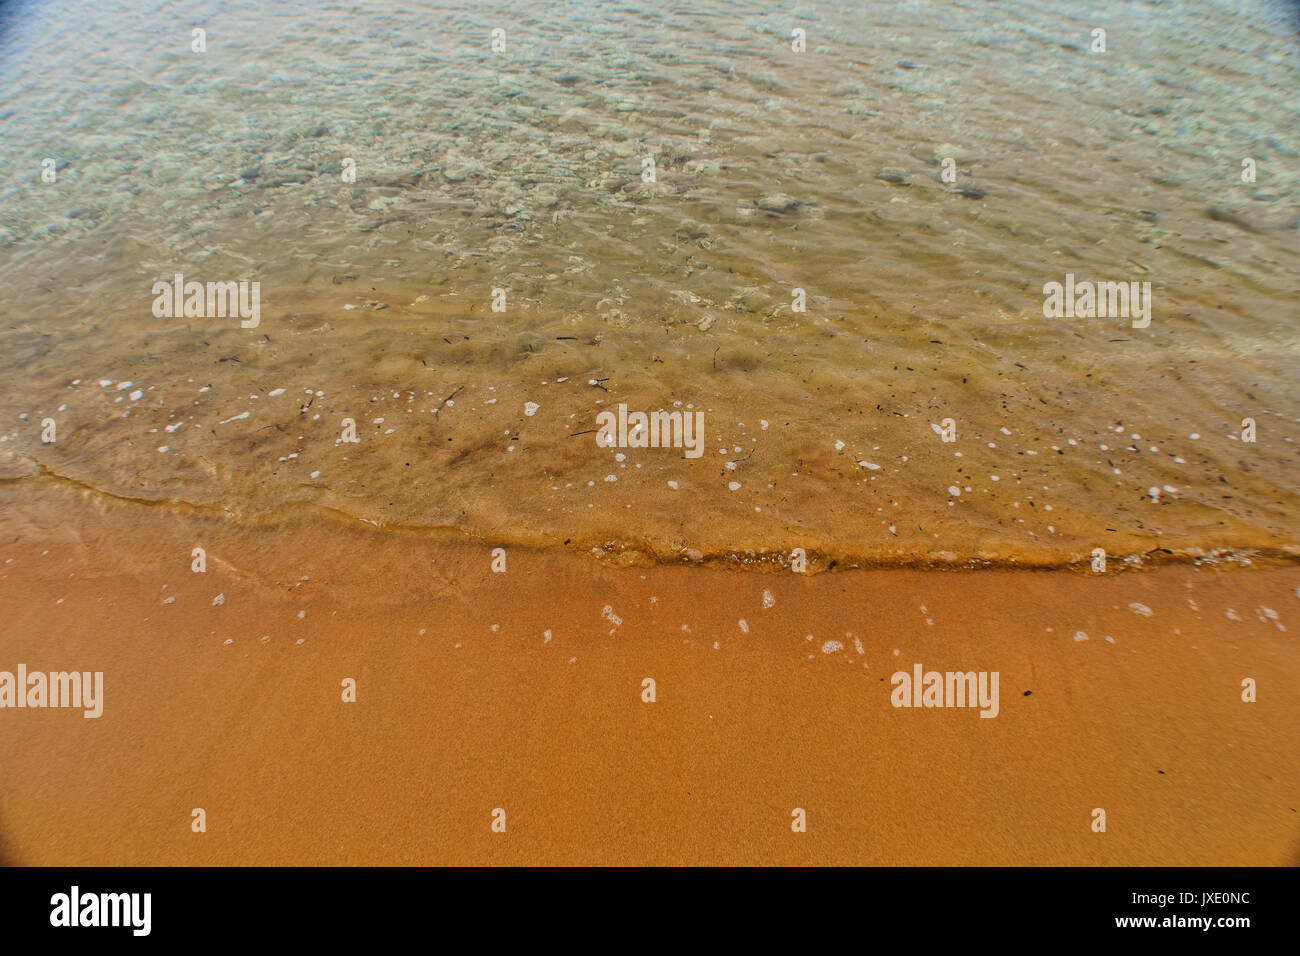 Sea lapping gently on an orange beach sand Stock Photo